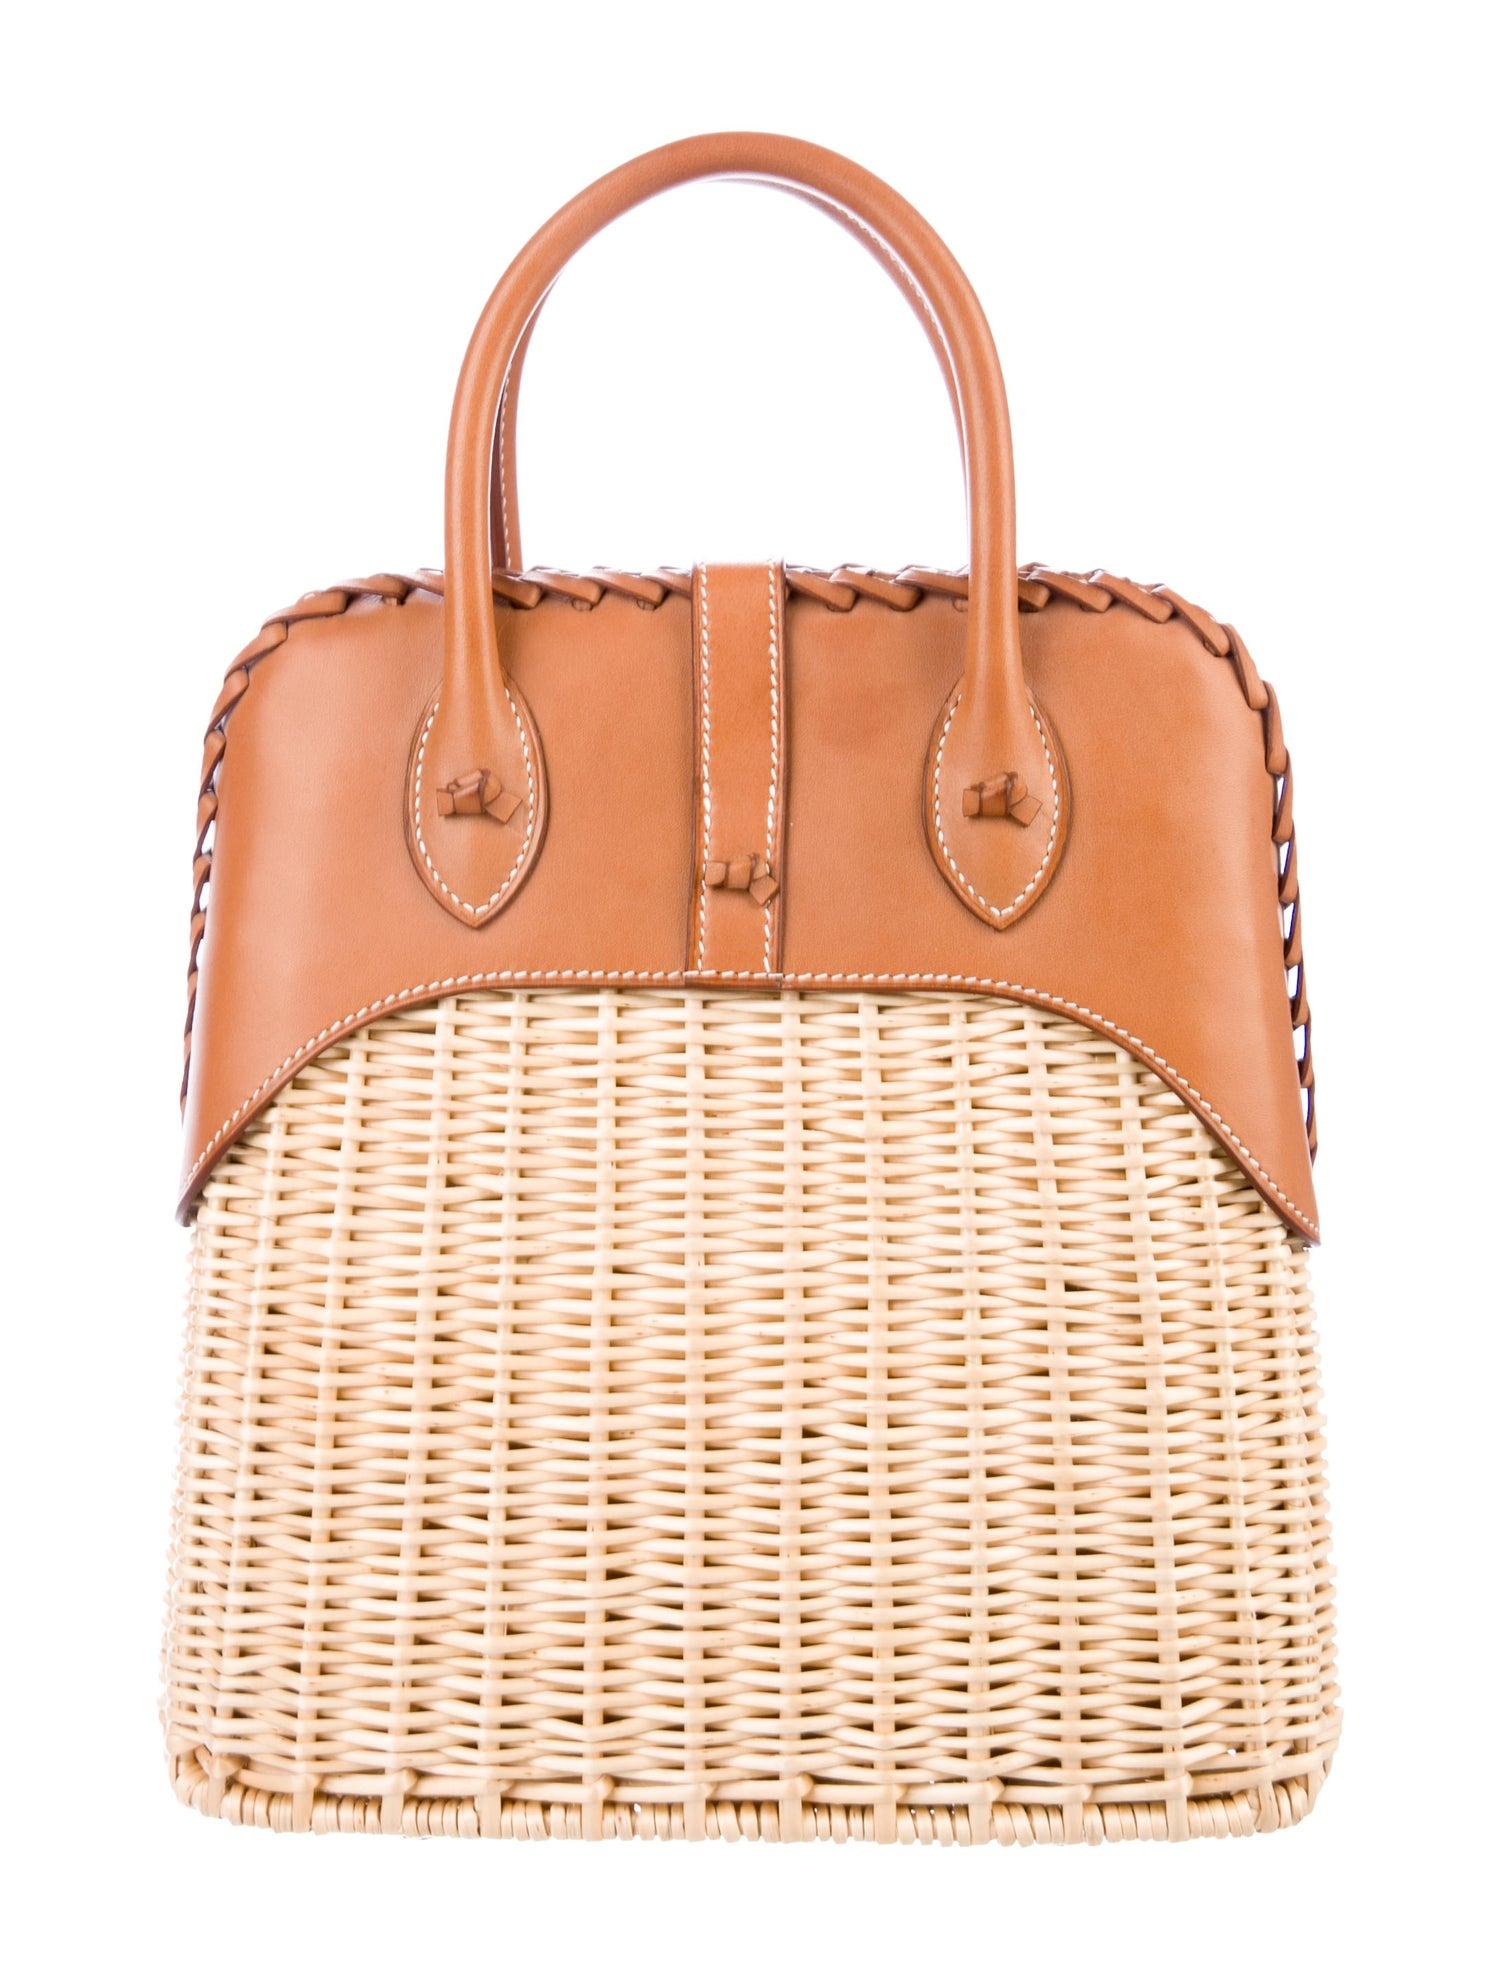 Hermes NEW Tan Wicker Cognac Leather Top Handle Satchel Bag with Dust Bag & Box (Orange)